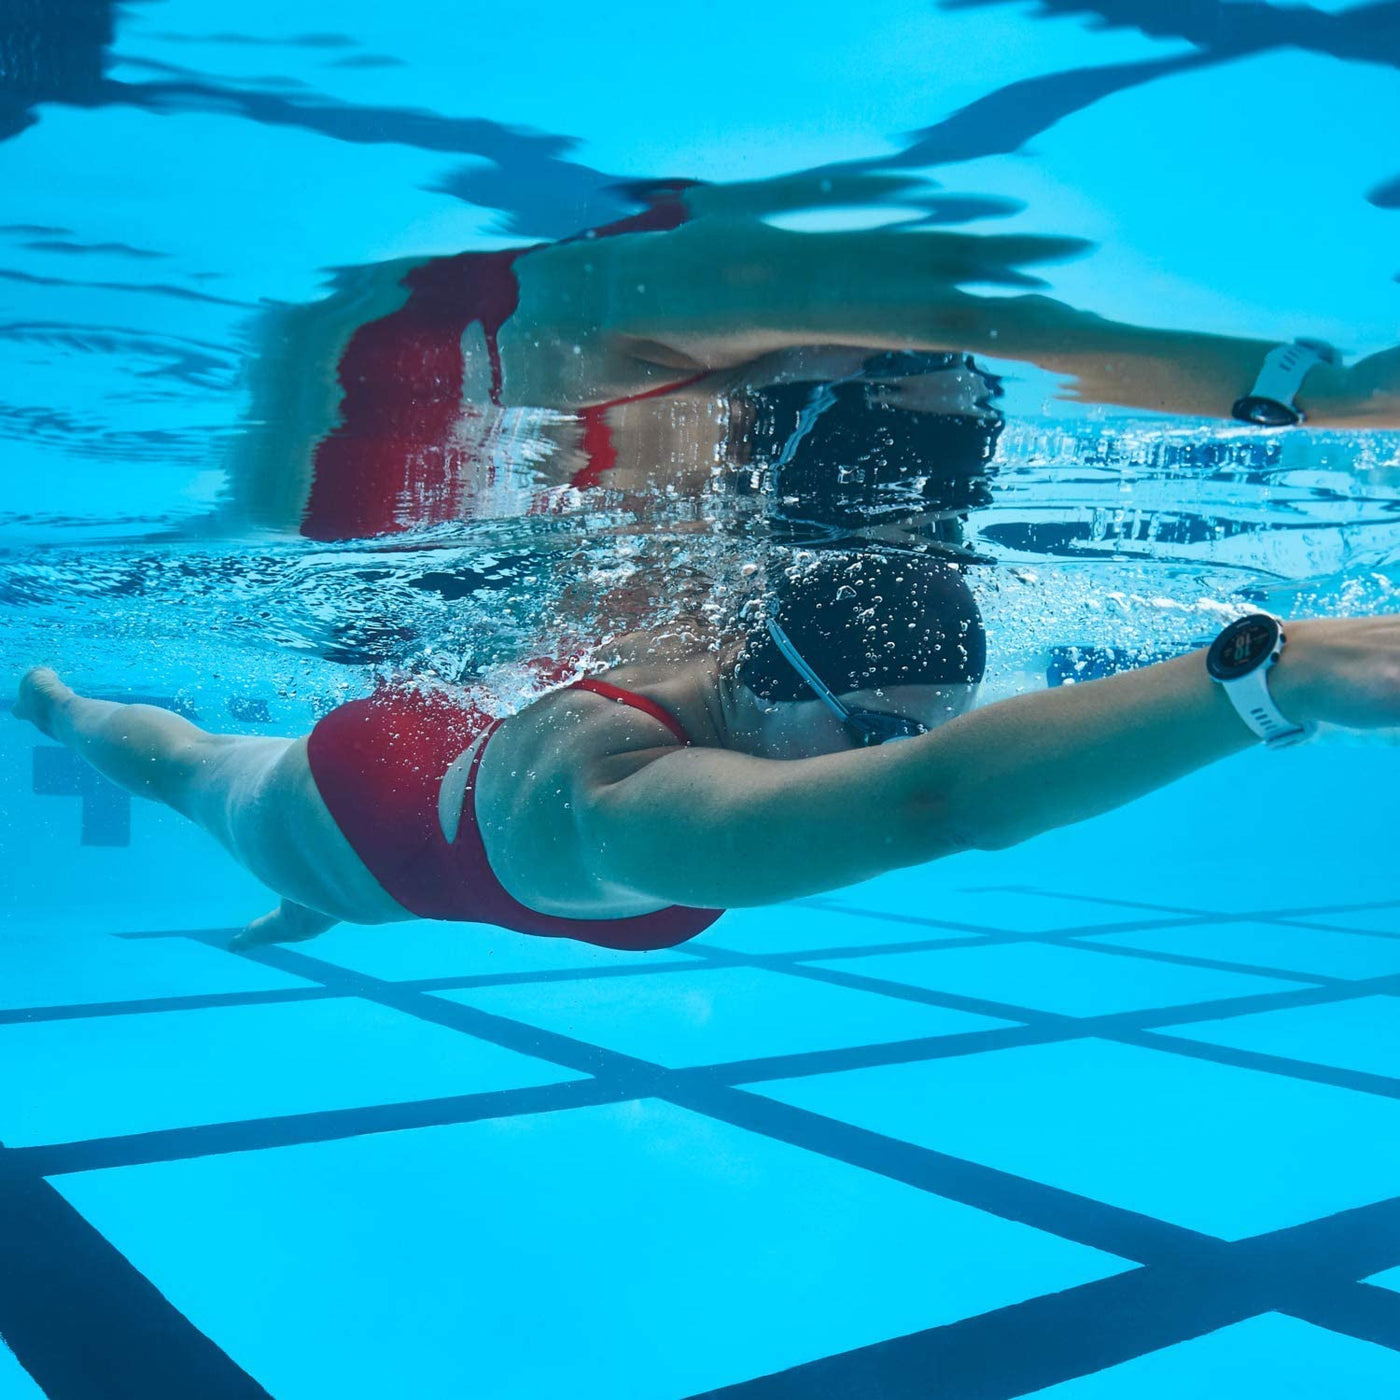 Garmin Swim 2, GPS Swimming Smartwatch HRM-Swim Heart Rate Monitor